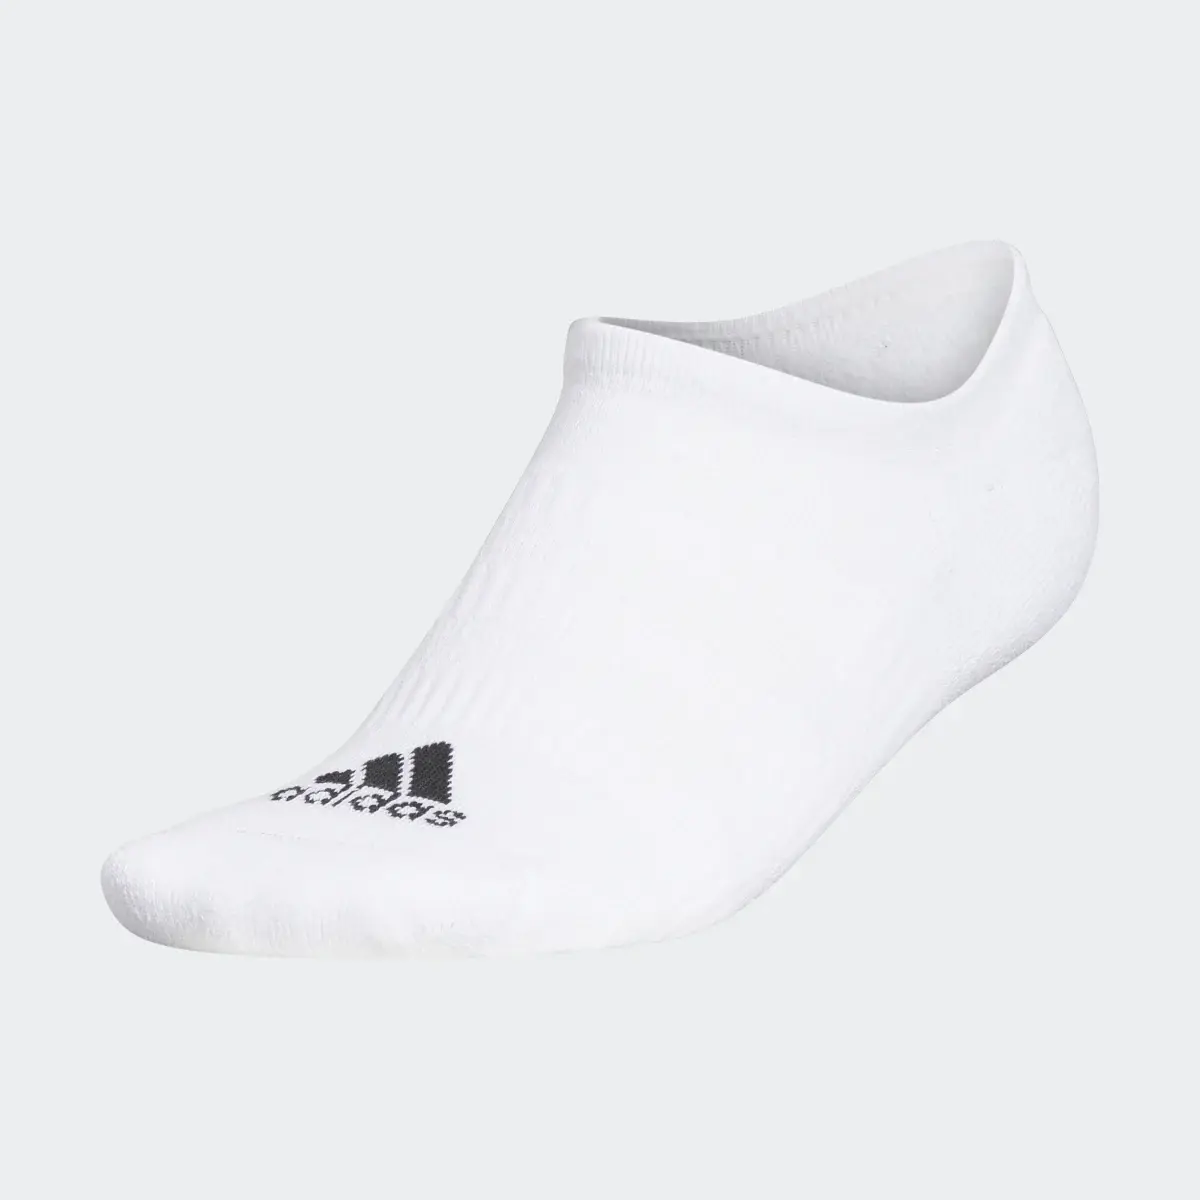 Adidas Performance Socken. 2